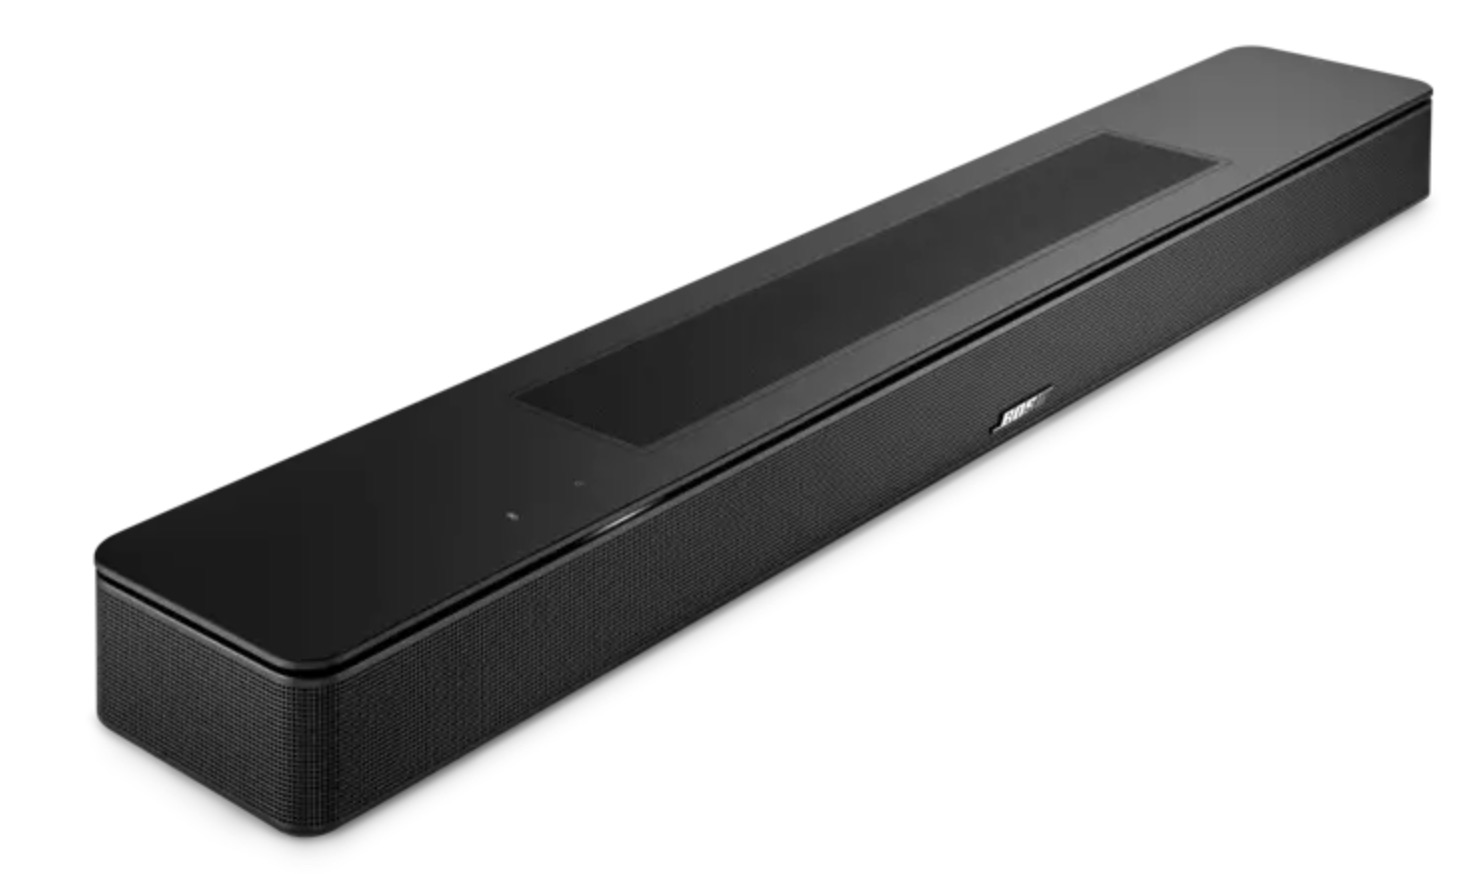 Bose Smart Soundbar 600